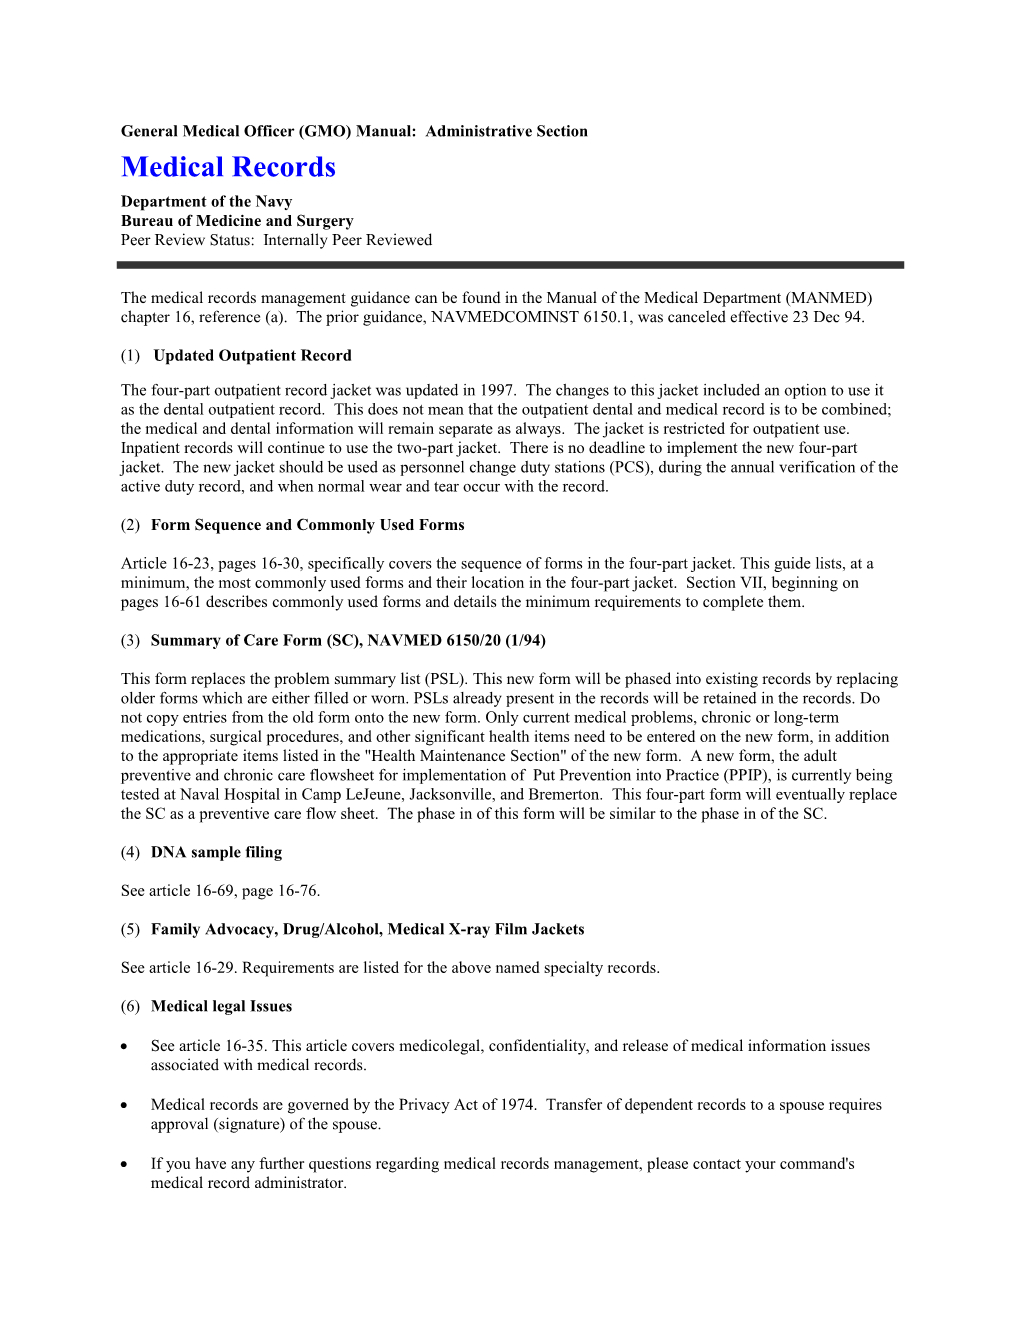 General Medical Officer (GMO) Manual: Medical Records